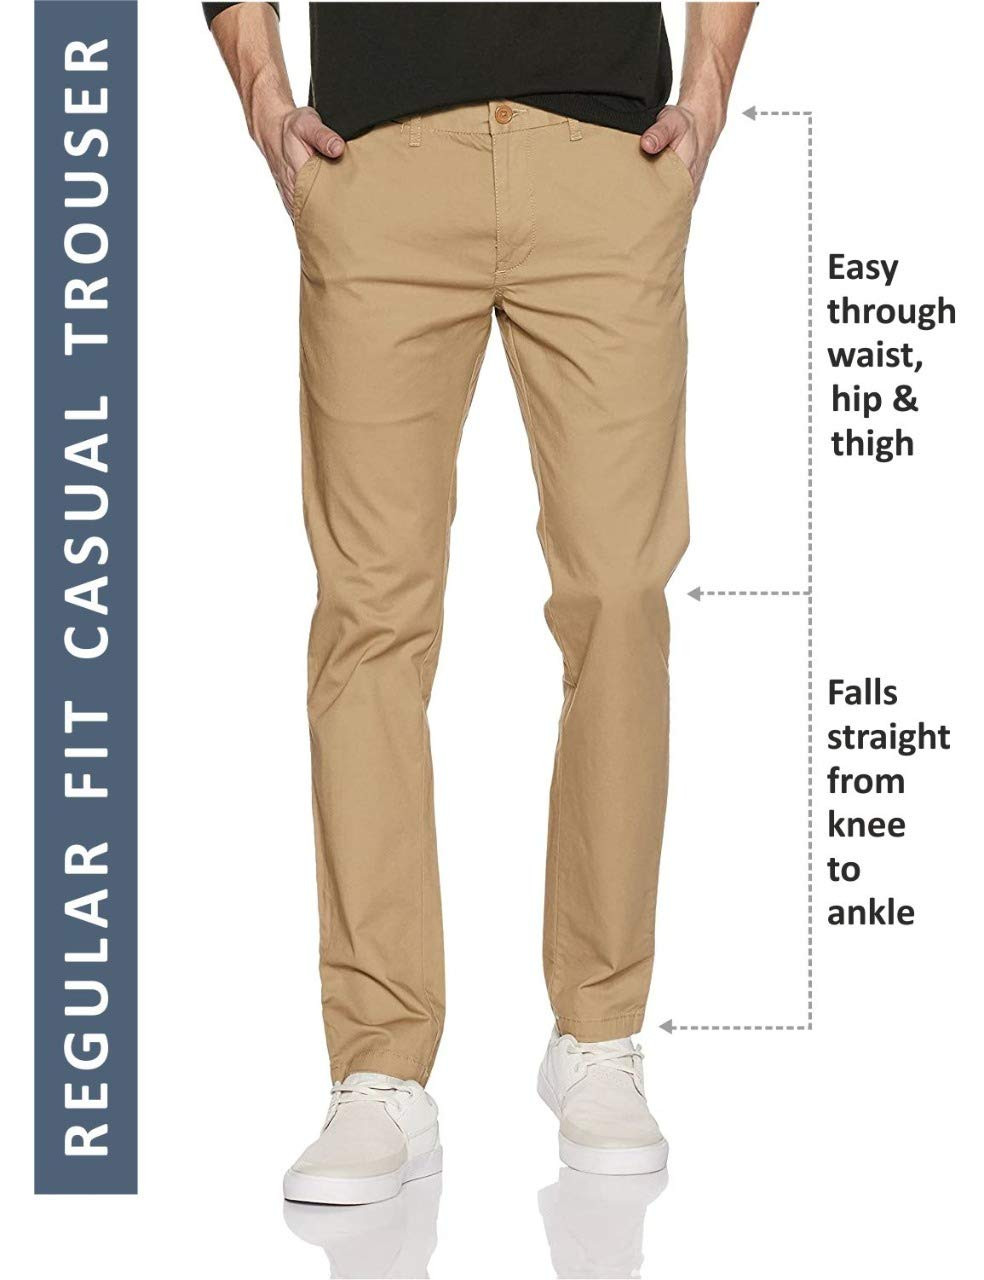 Khaki Work Pants MINGYU Brand Clothing Cargo Men 97%Cotton Thick Outdoors  Work Wear Khaki Casual Pant Wide Korean Jogger Trousers Male From  Peanutoil, $17.58 | DHgate.Com